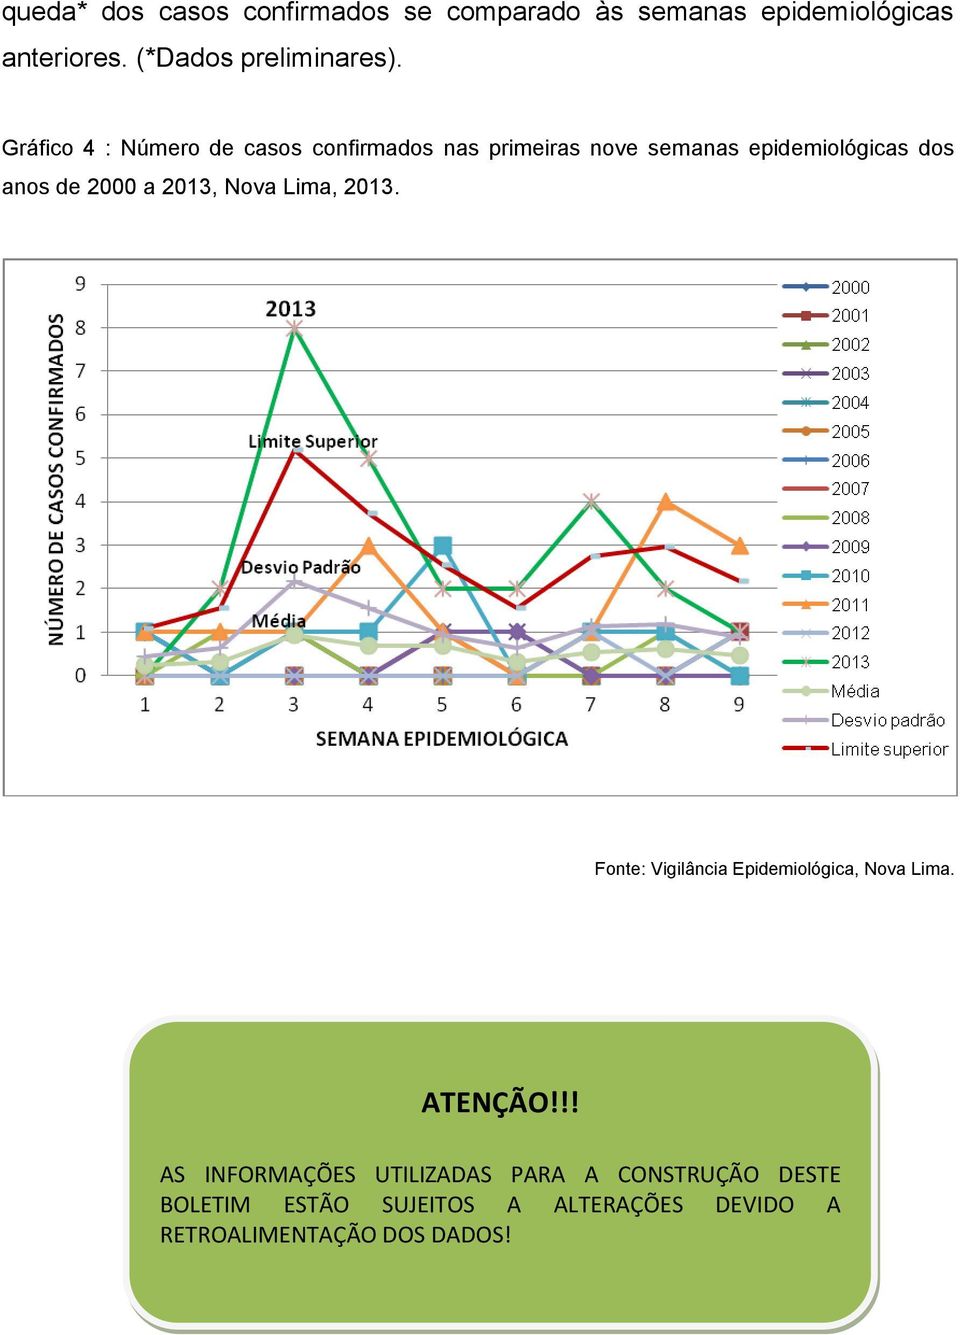 Gráfico 4 : Número de casos confirmados nas primeiras nove semanas epidemiológicas dos anos de 2000 a